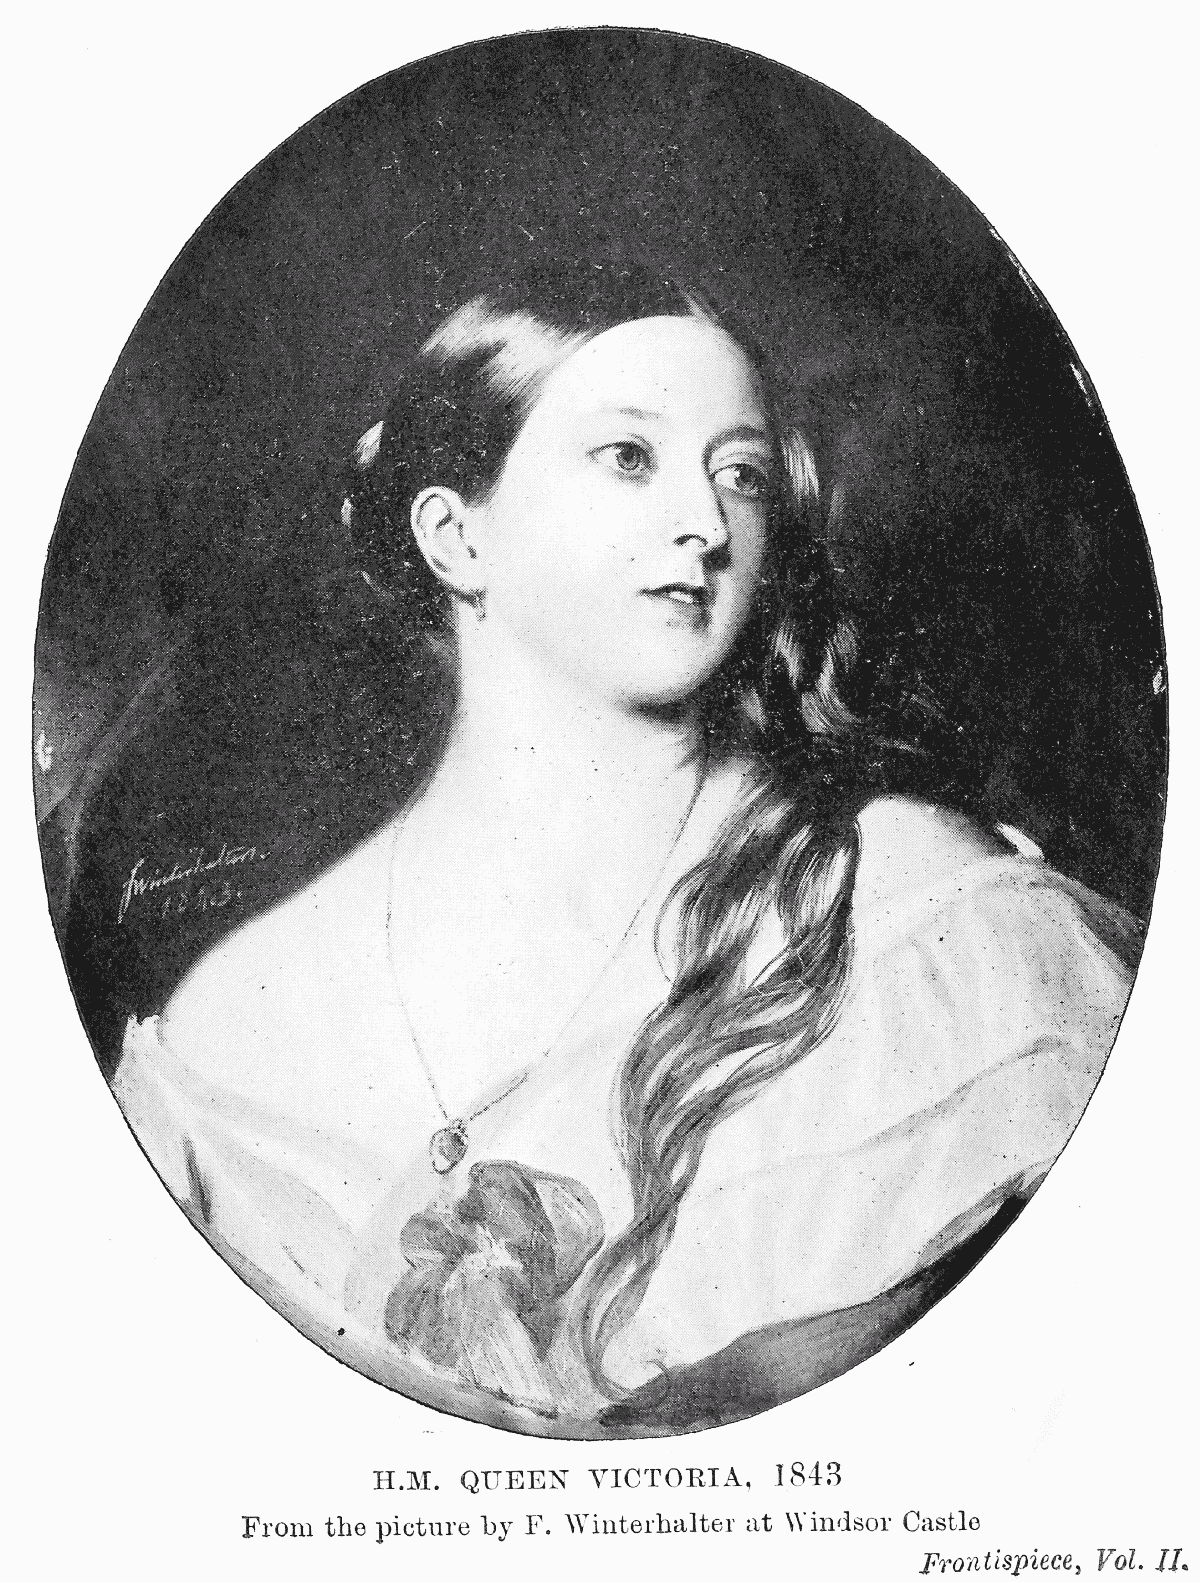 The Project Gutenberg eBook of 'Queen Victoria's Letters, Volume II